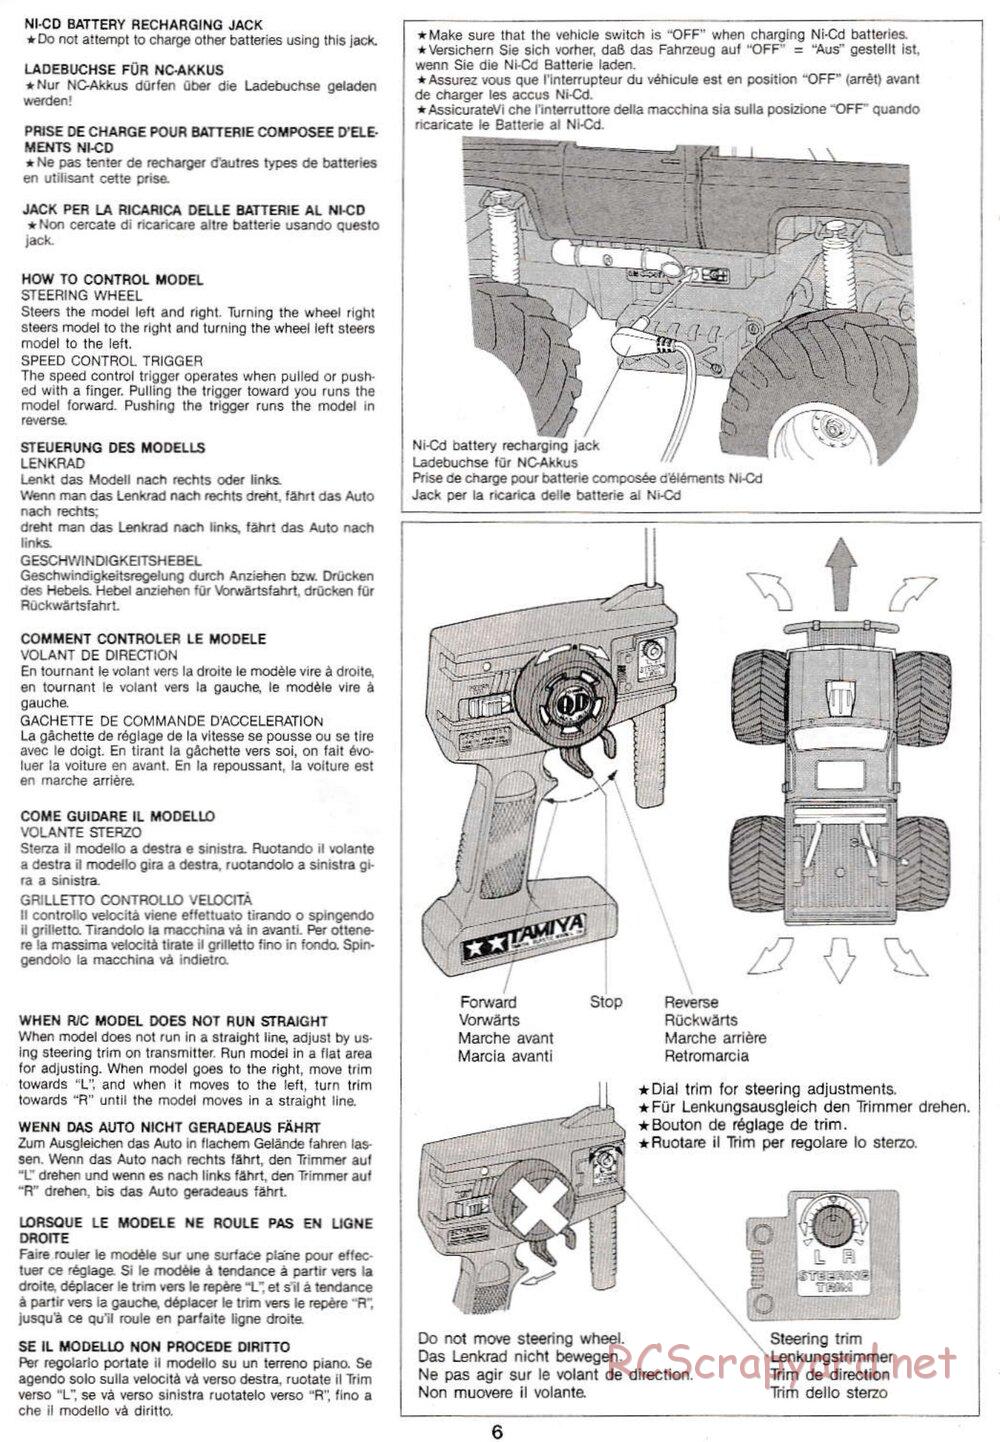 Tamiya - Clod Buster QD Chassis - Manual - Page 6